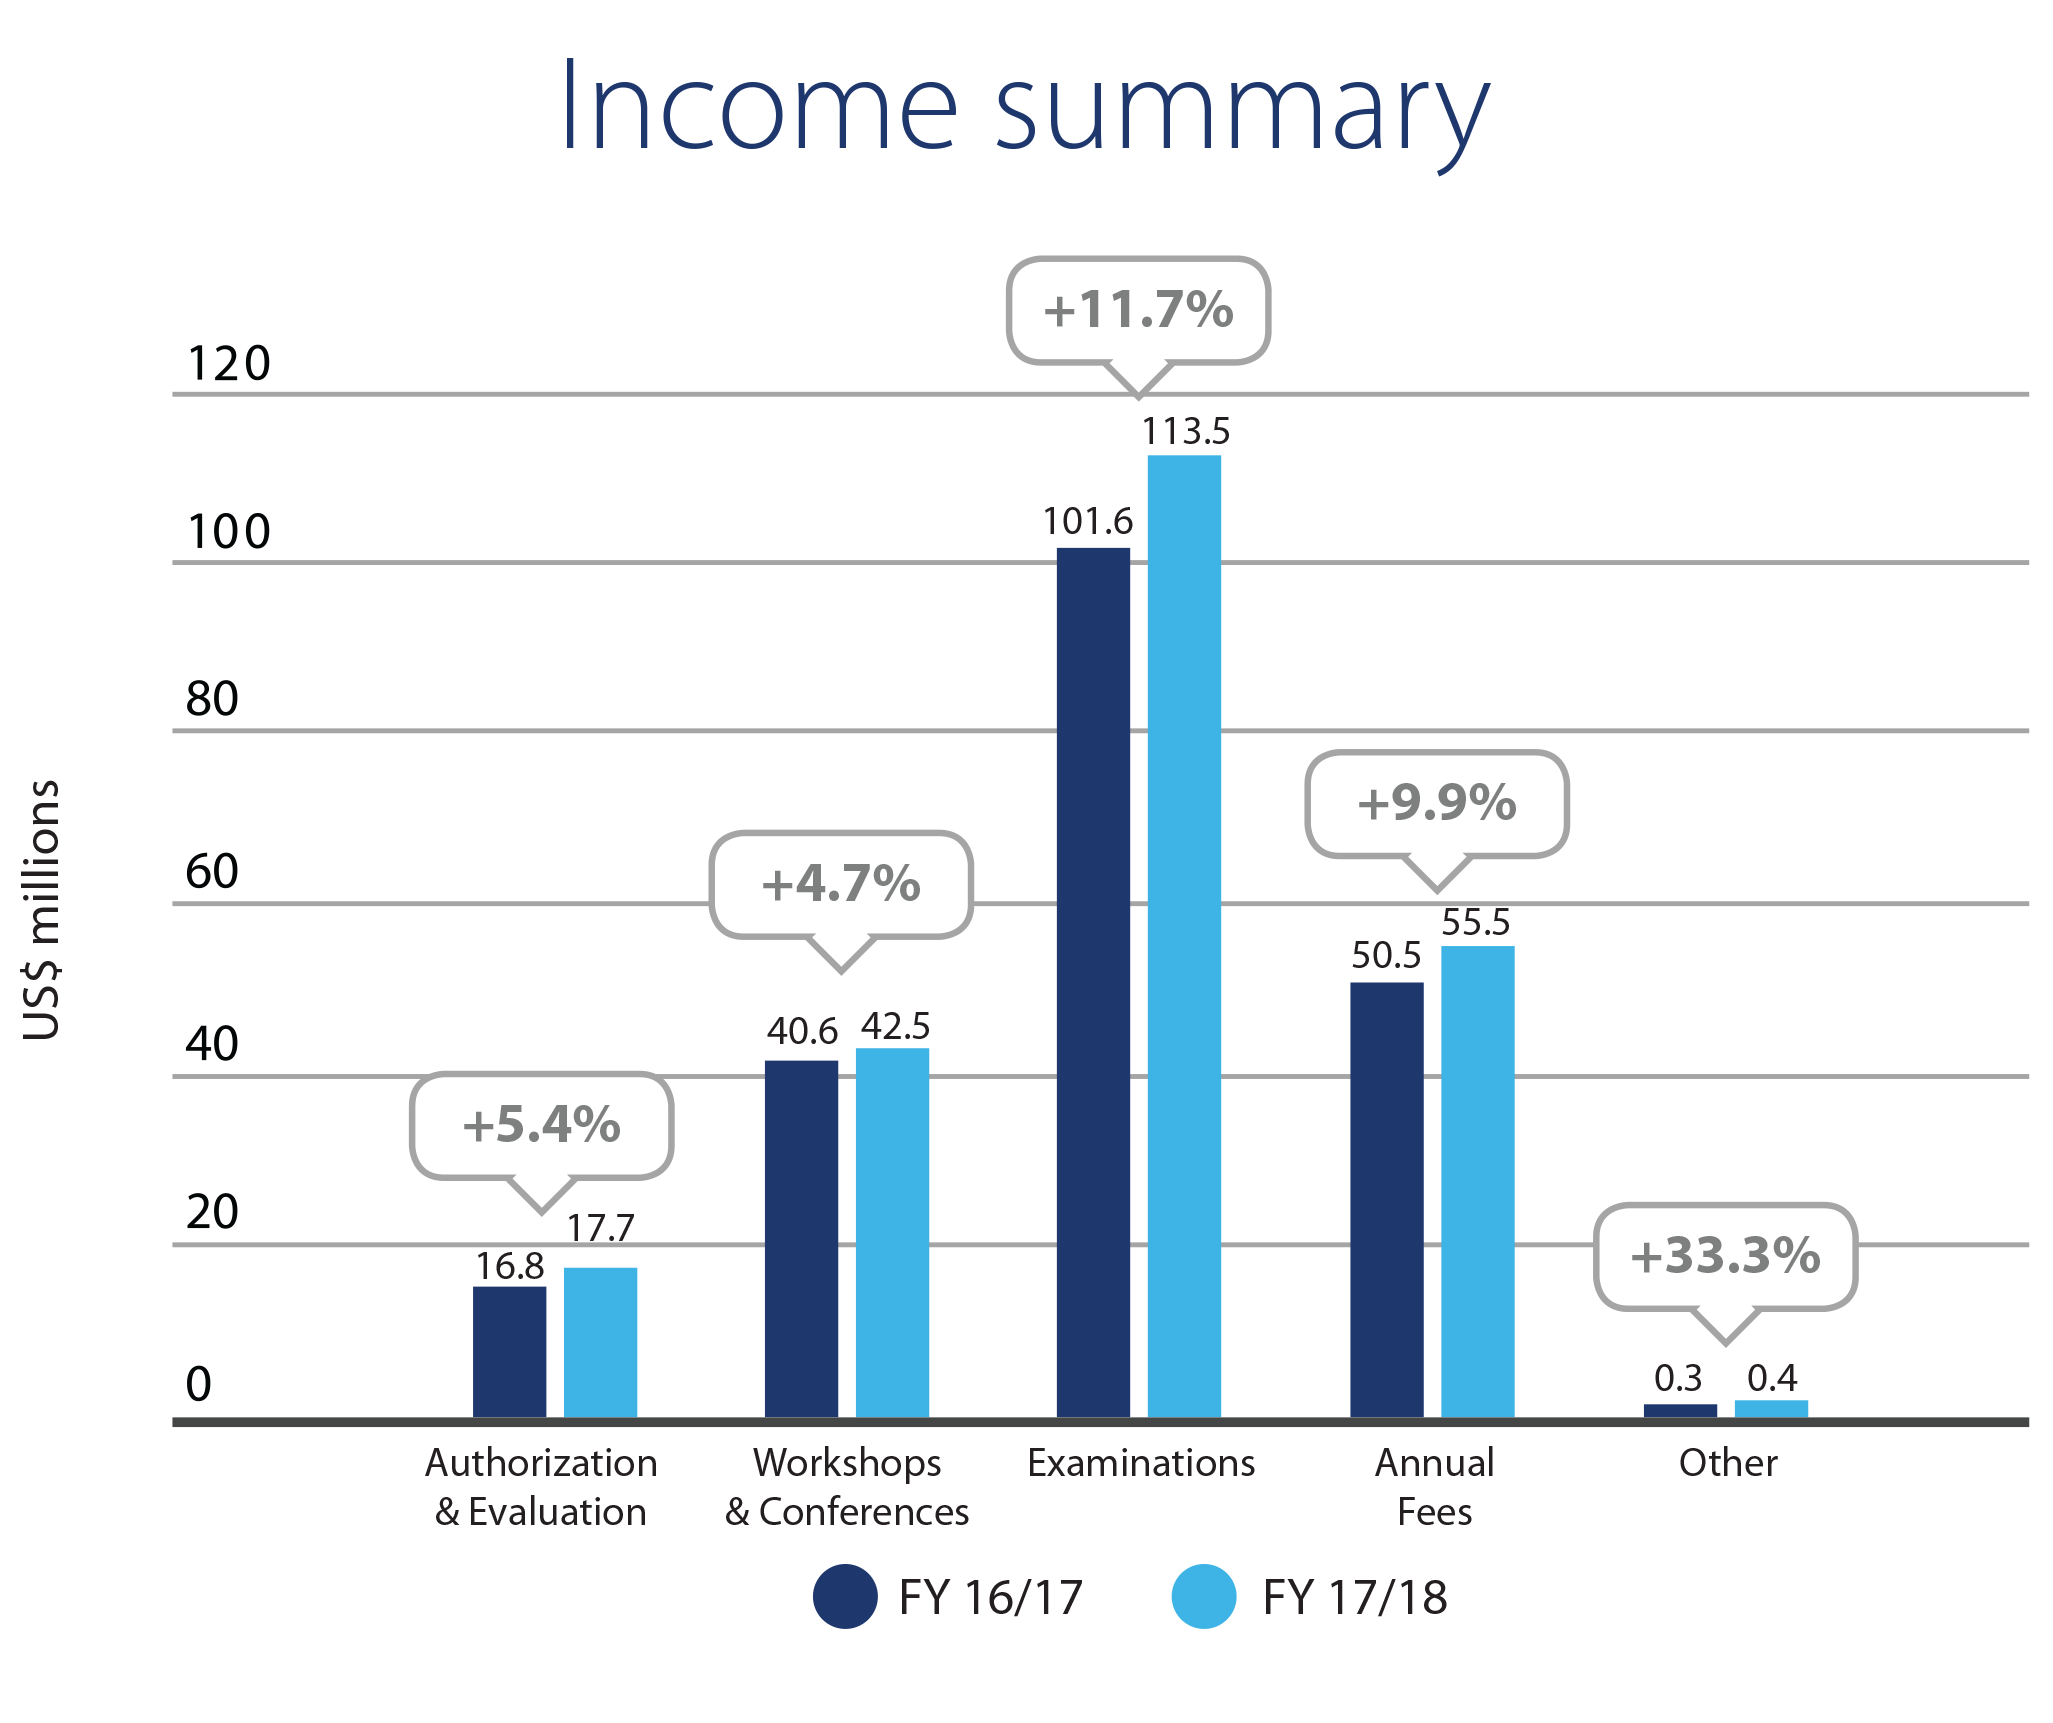 Income summary